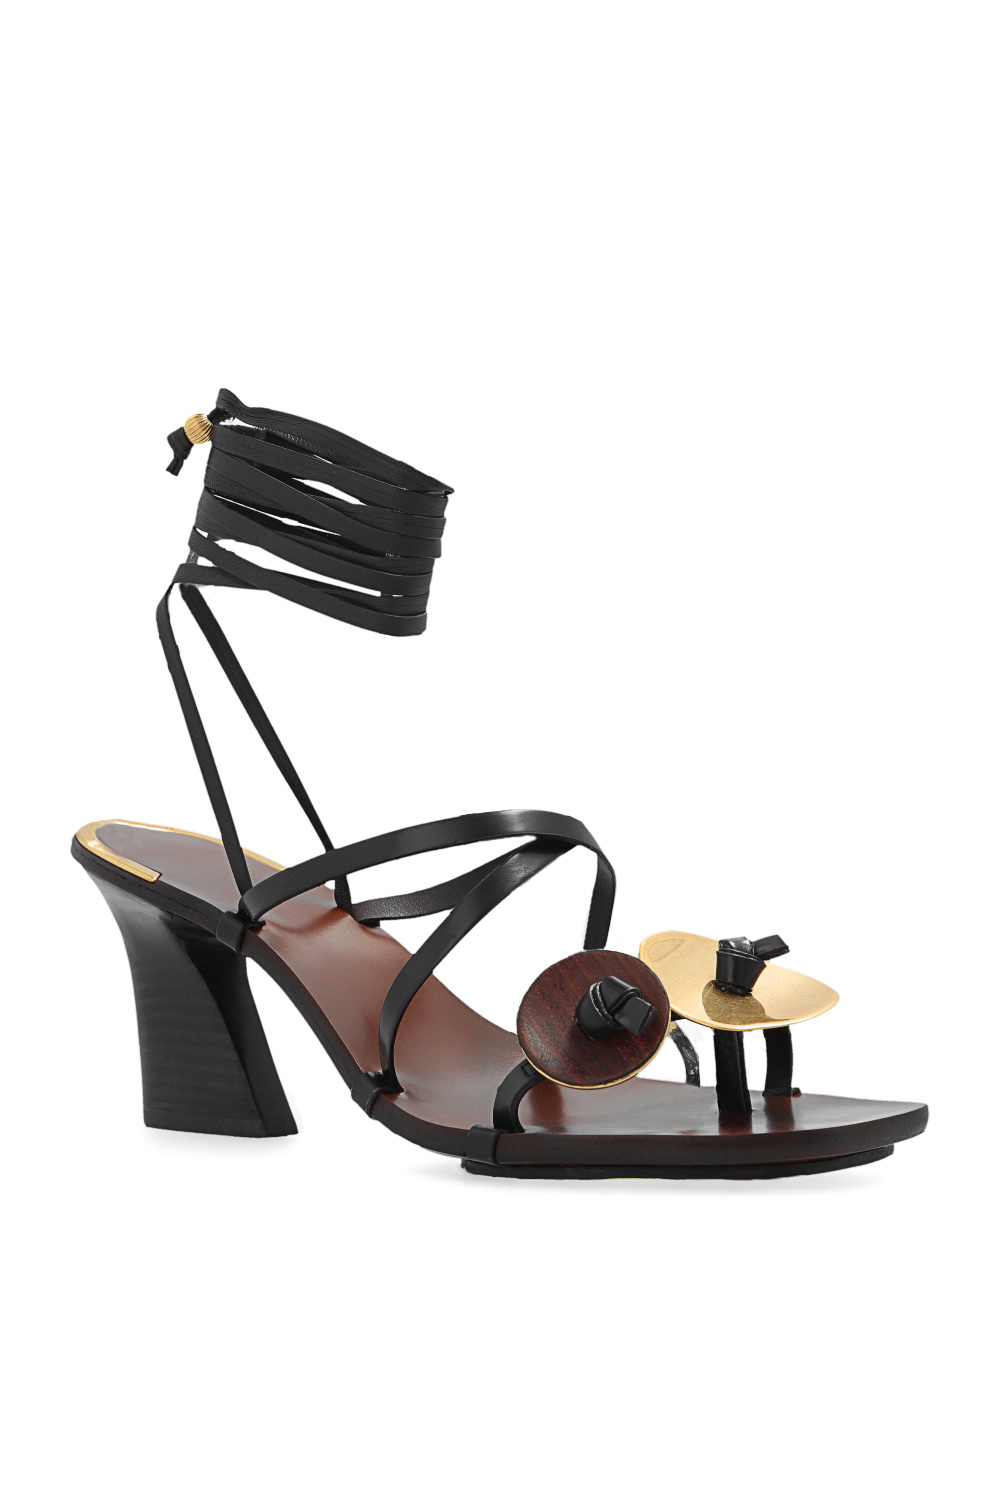 Tory Burch ‘Artisanal’ heeled sandals